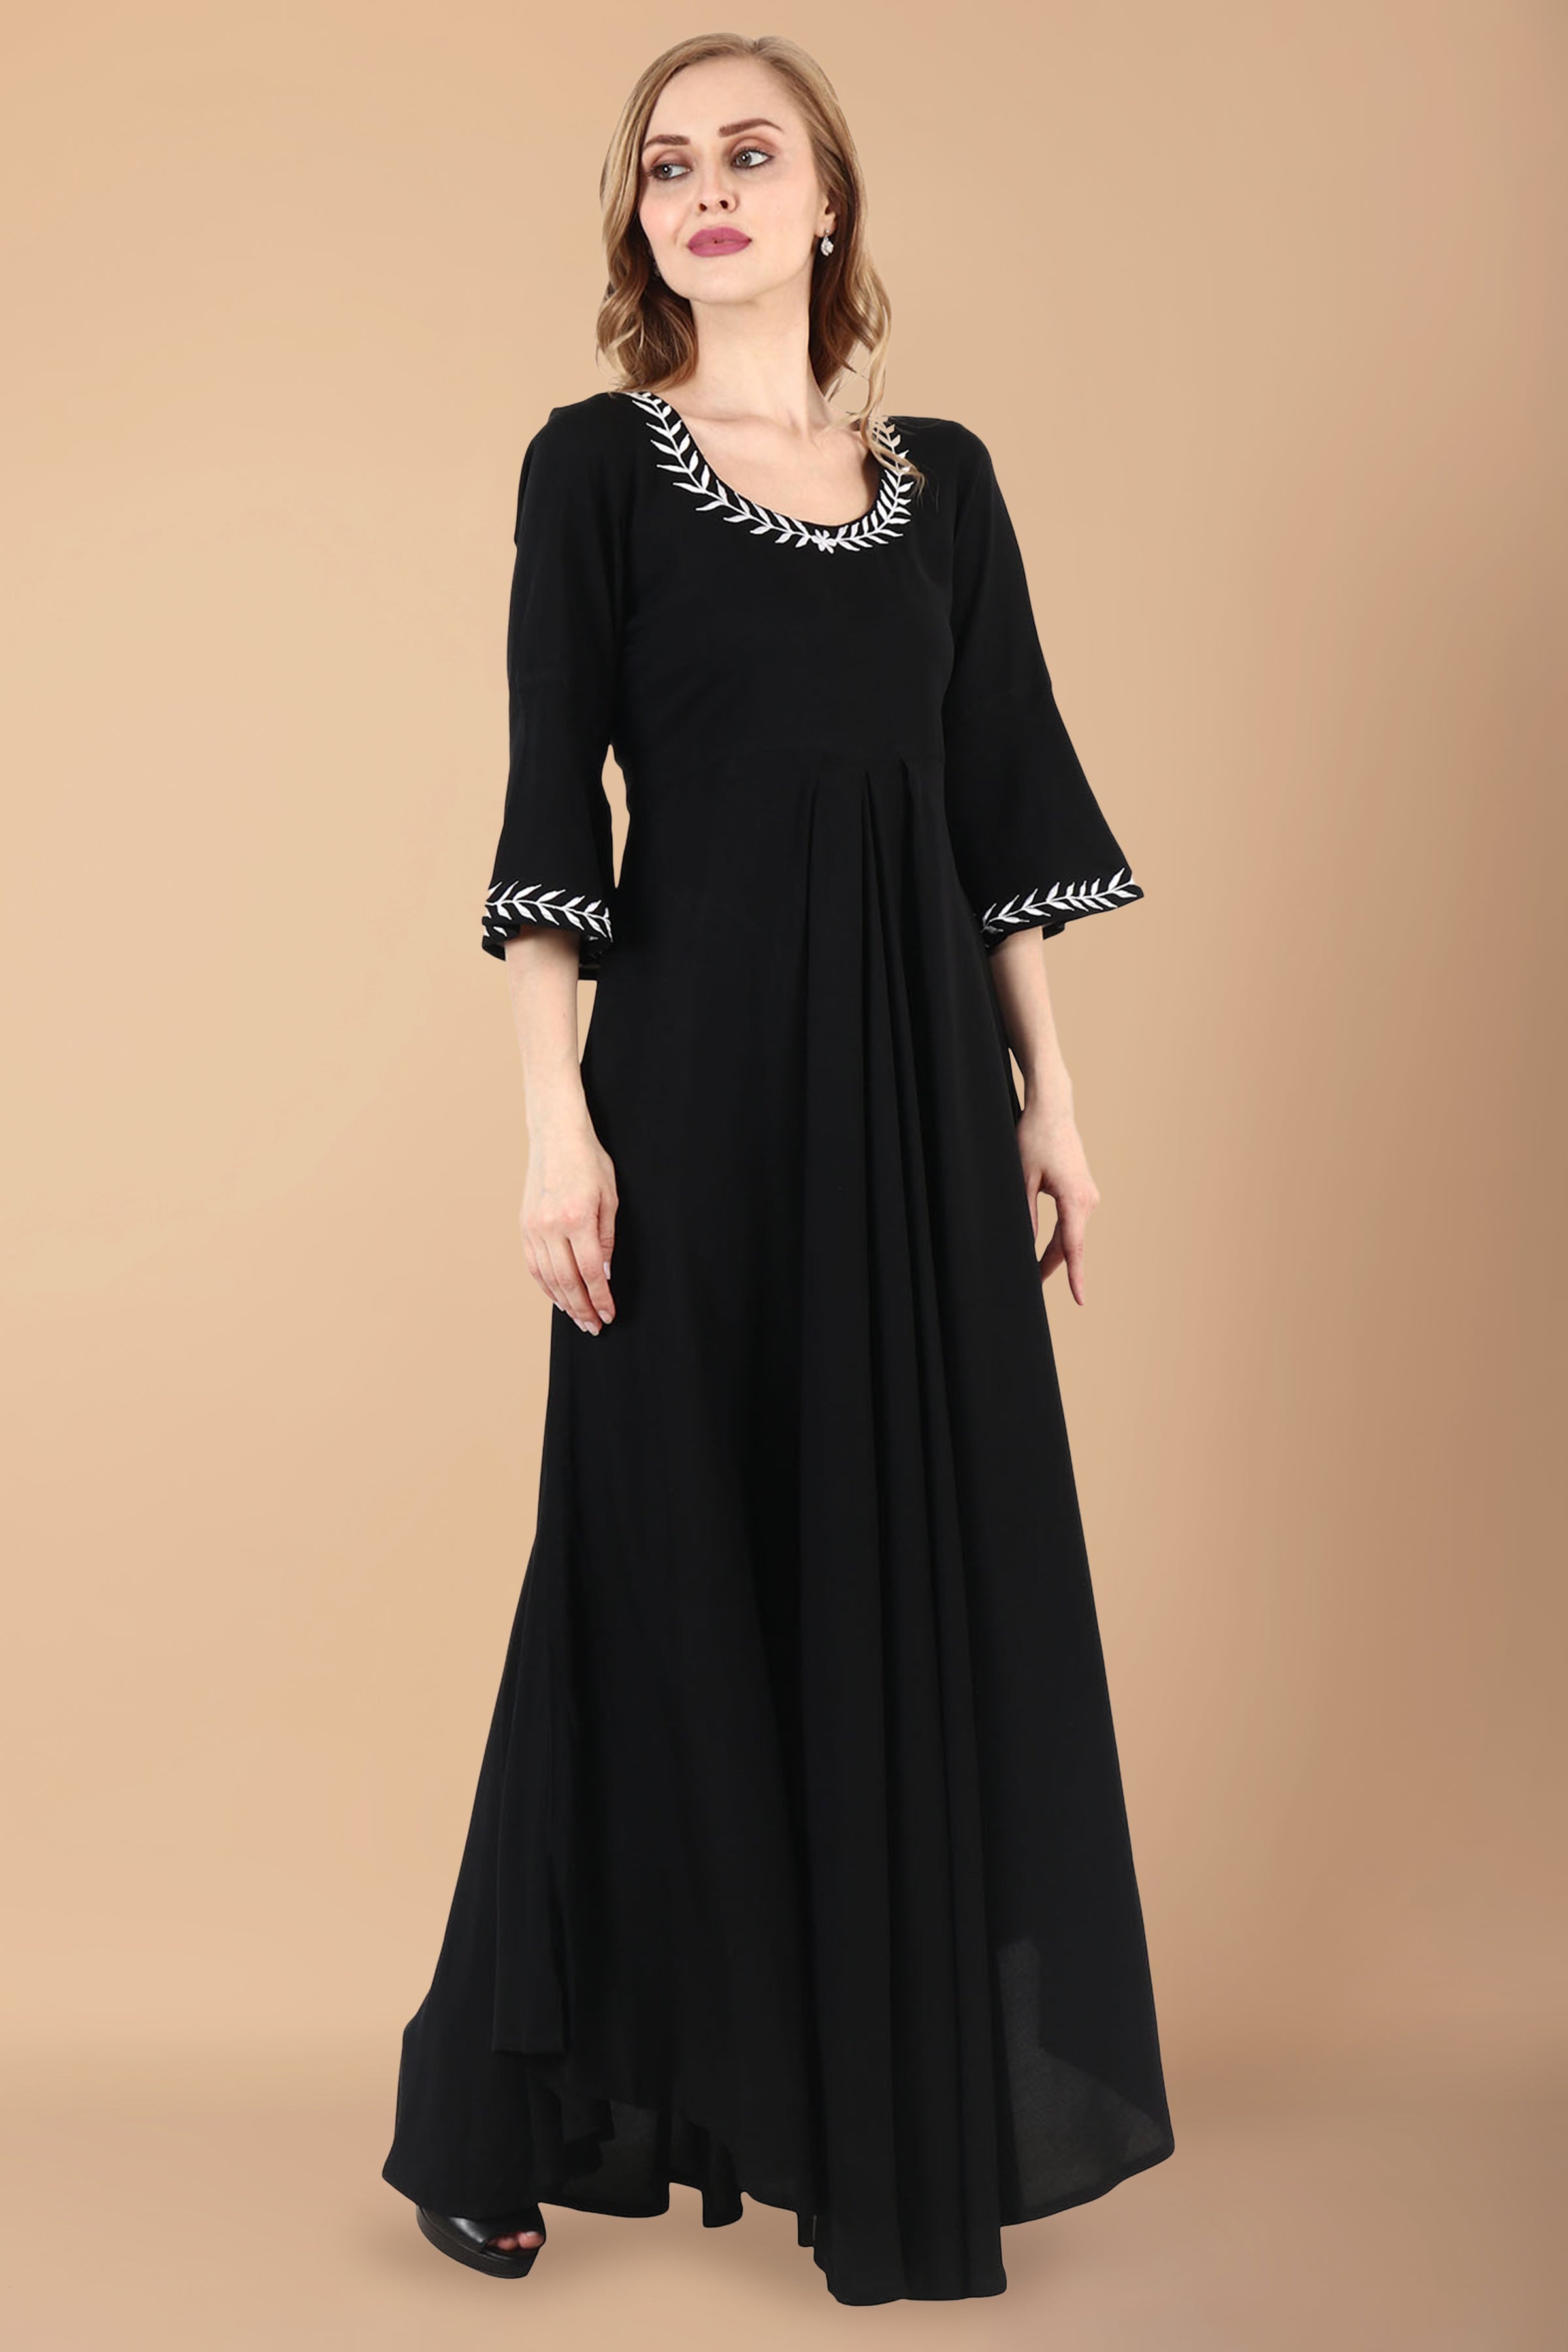 Black Party Dress, Black Dress, Women Maxi Dress, Floor Length Dress,  Gothic Clothing, Minimalist Dress, Ball Gown Dress, Fashion Dress - Etsy  Norway